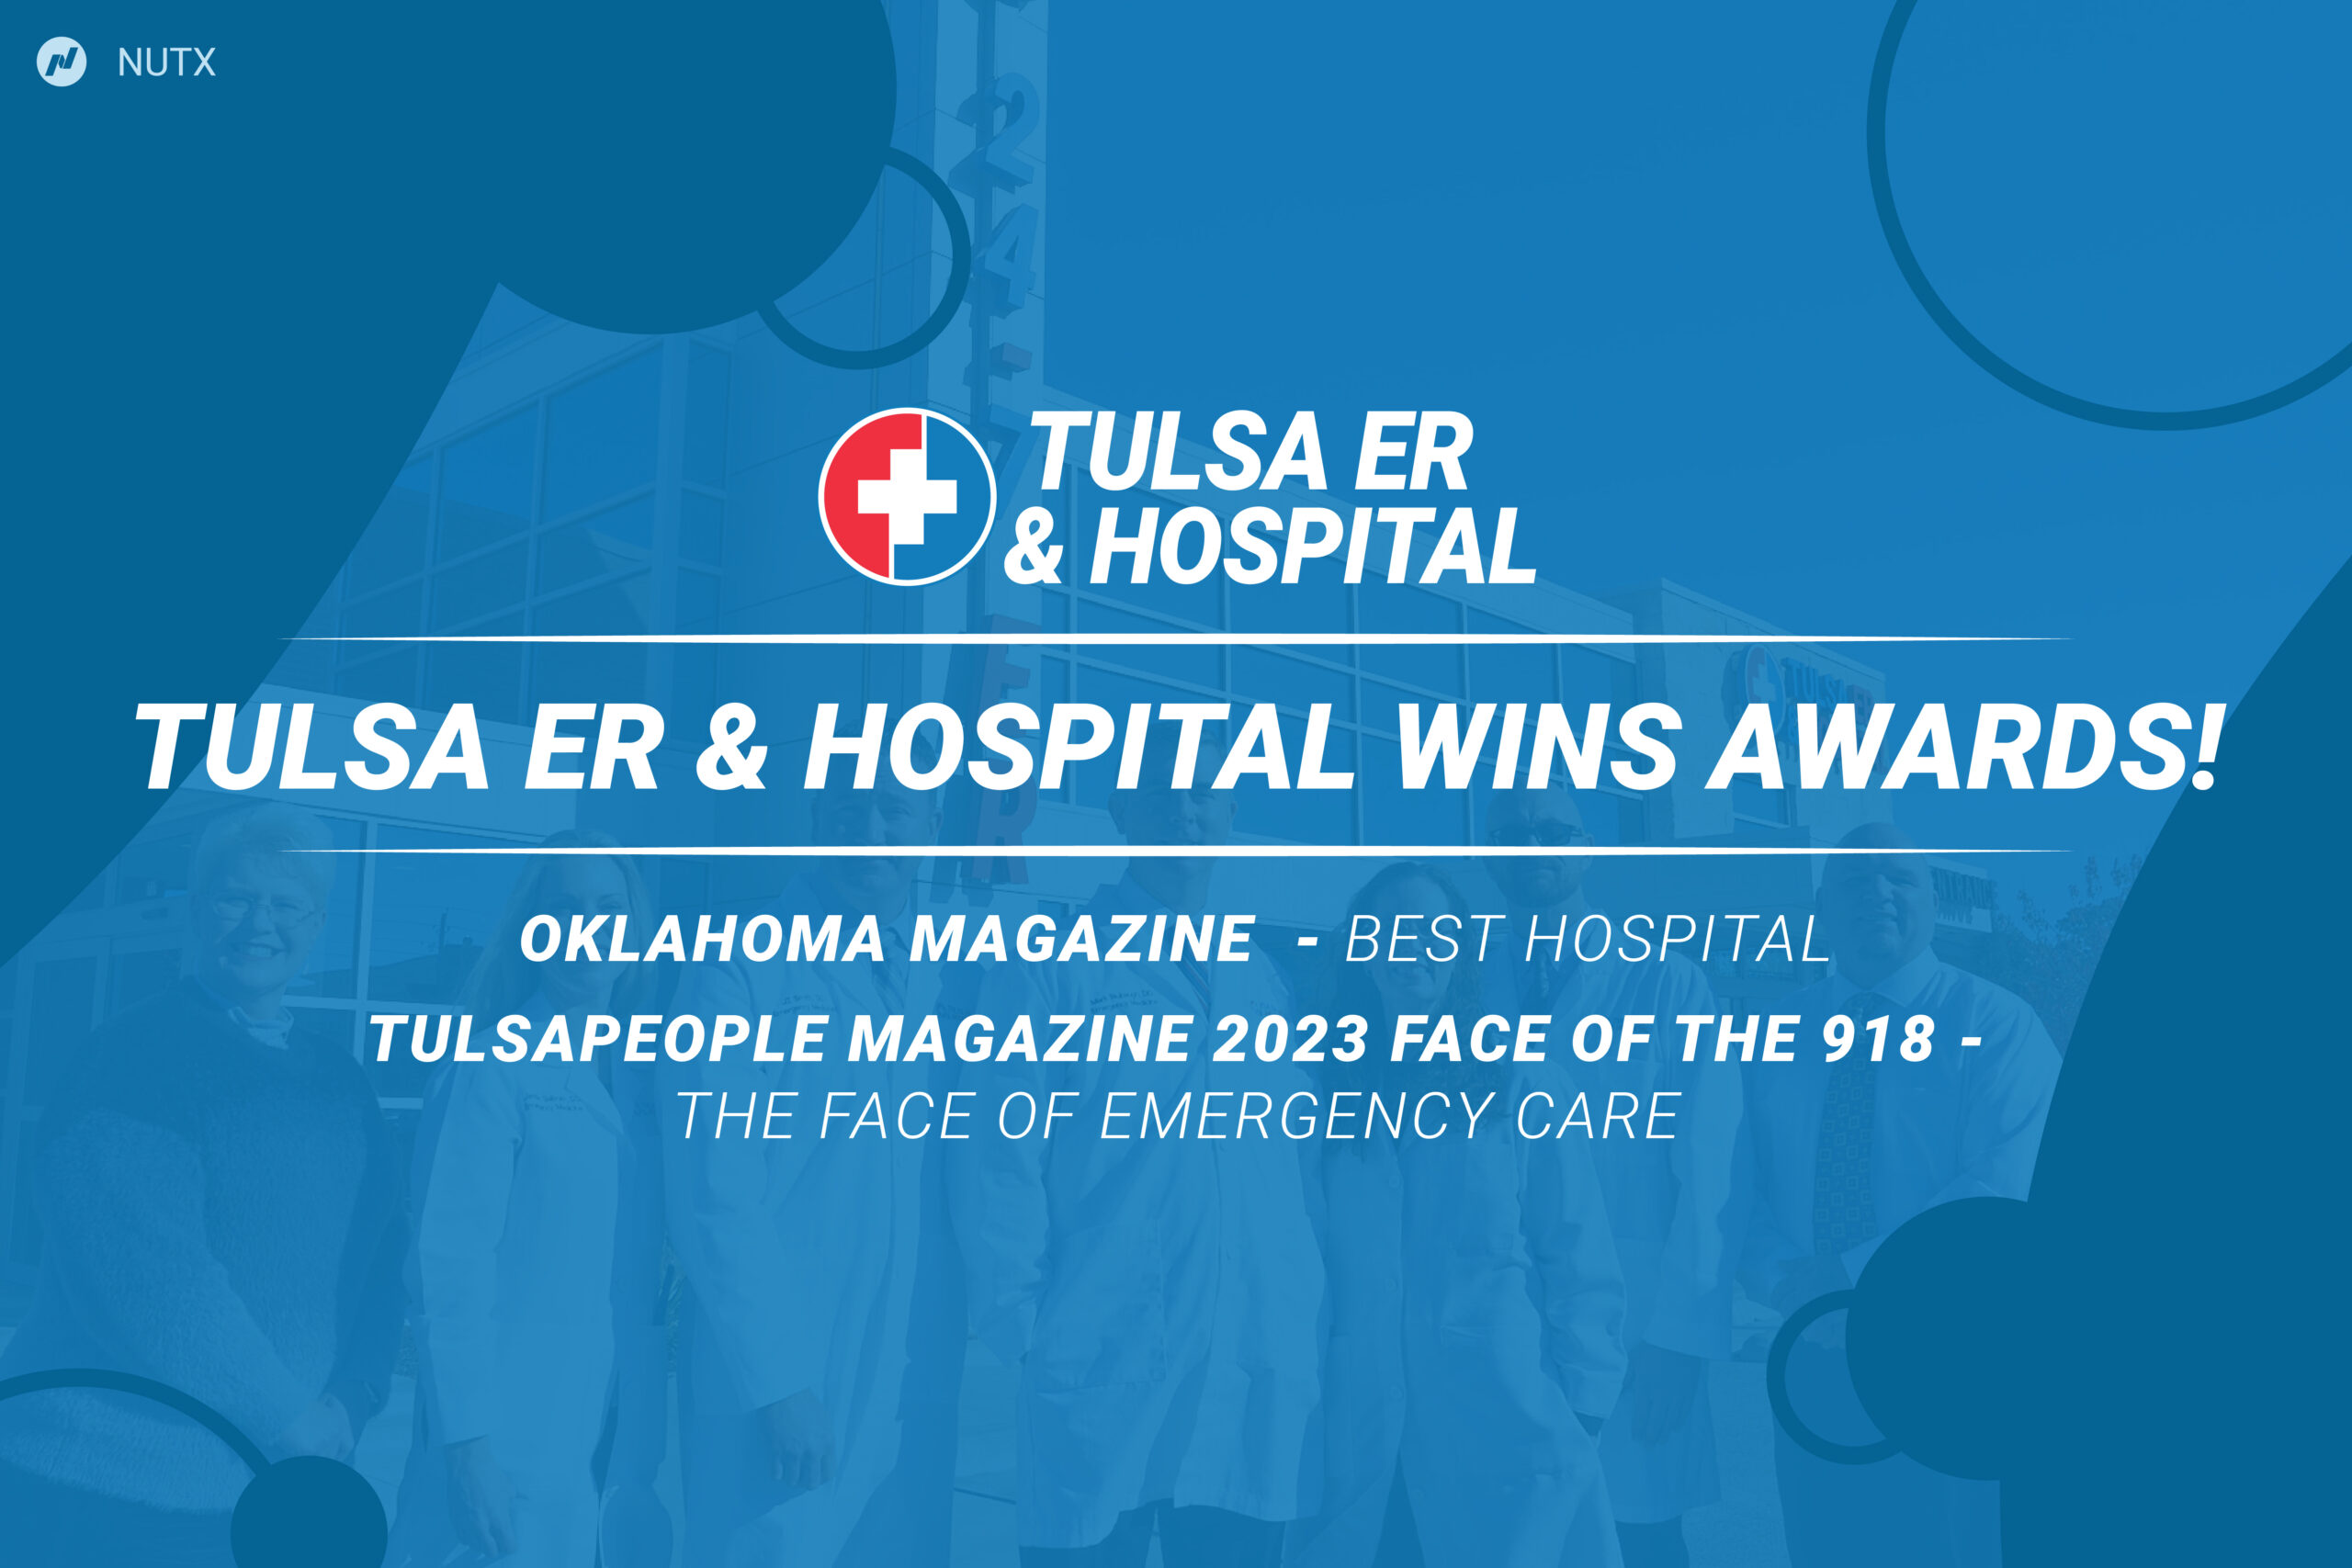 Tulsa ER & Hospital wins awards!